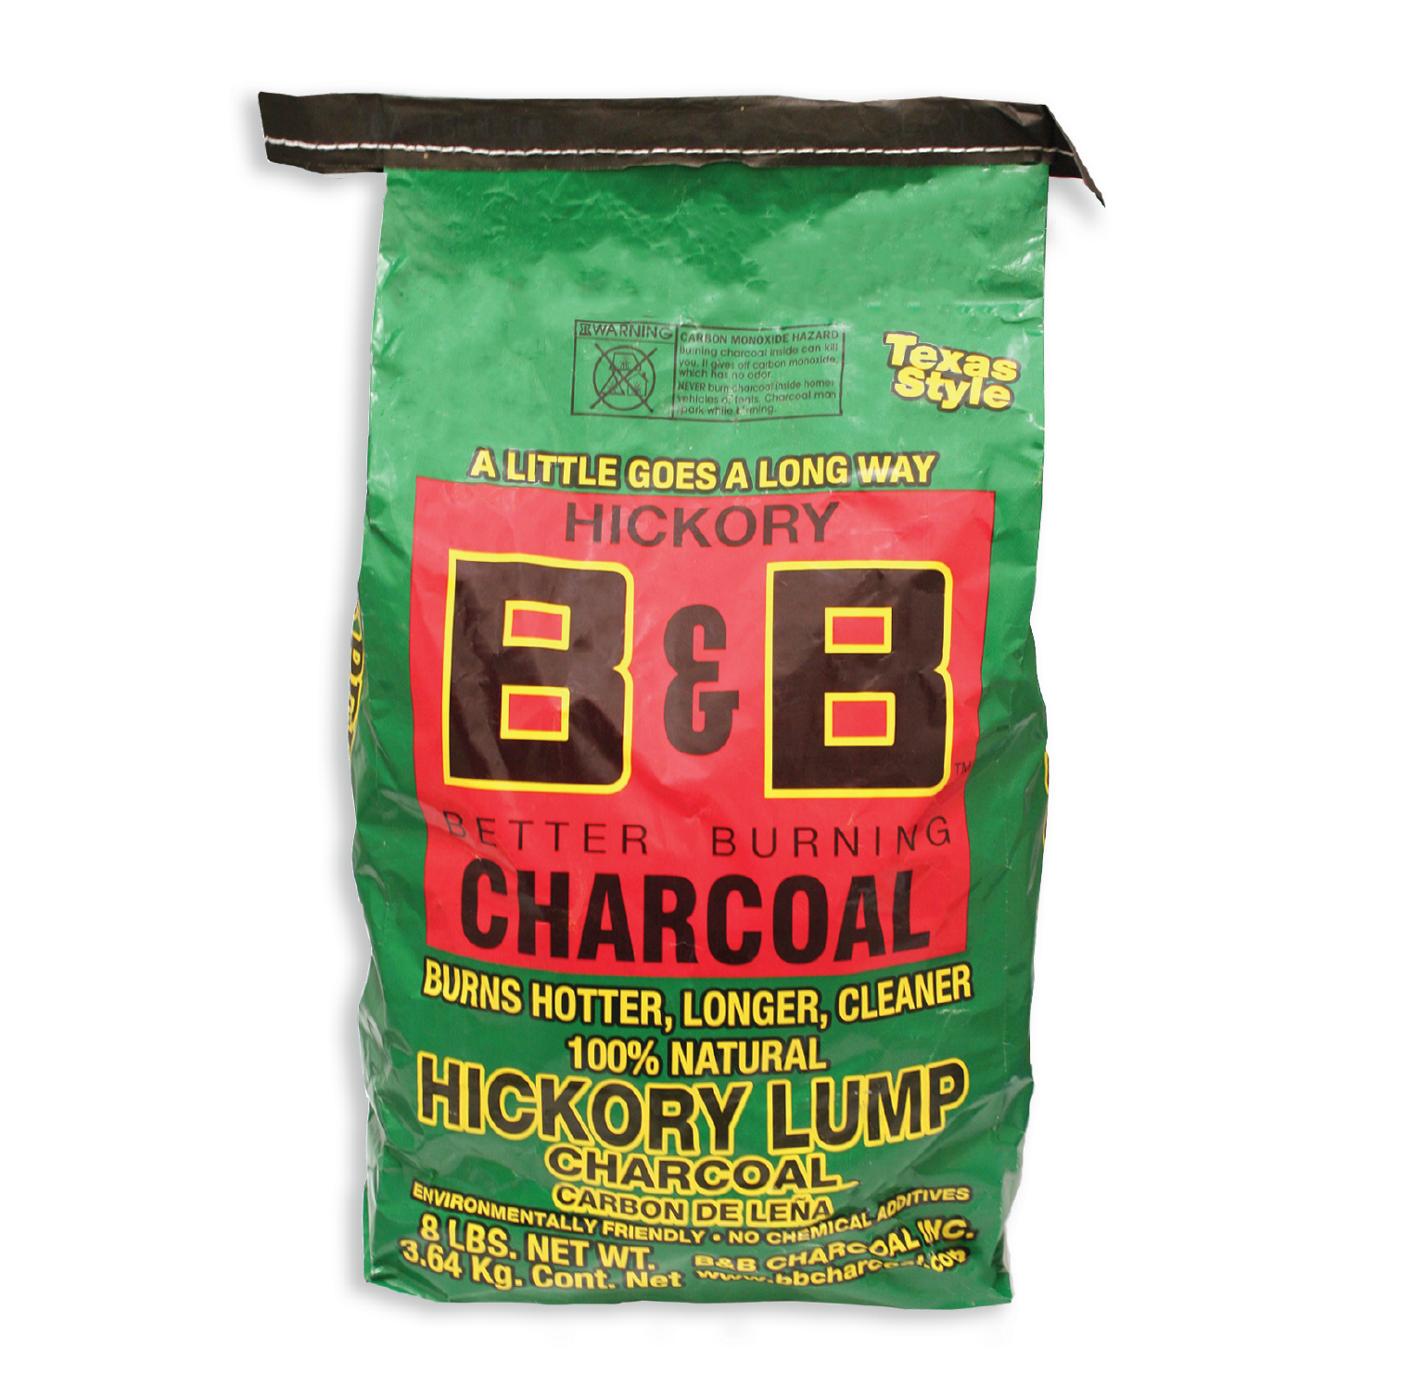 B&B Charcoal 100% Hickory Lump Charcoal; image 1 of 5